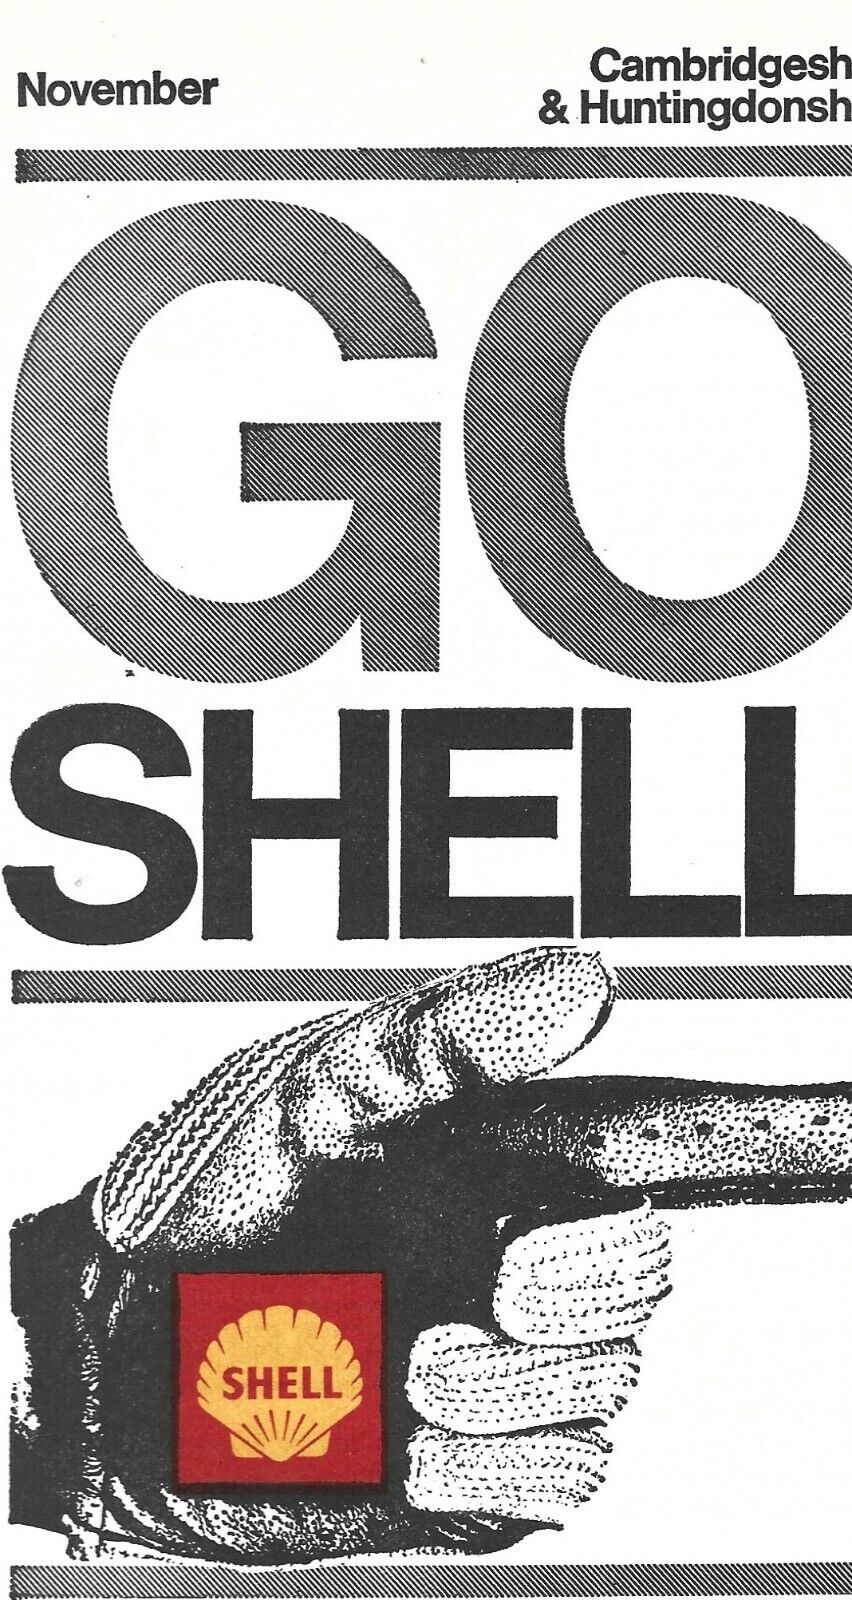 Go Shell Cambridge Huntingdon Local Information Attractions Petrol Diesel 1965